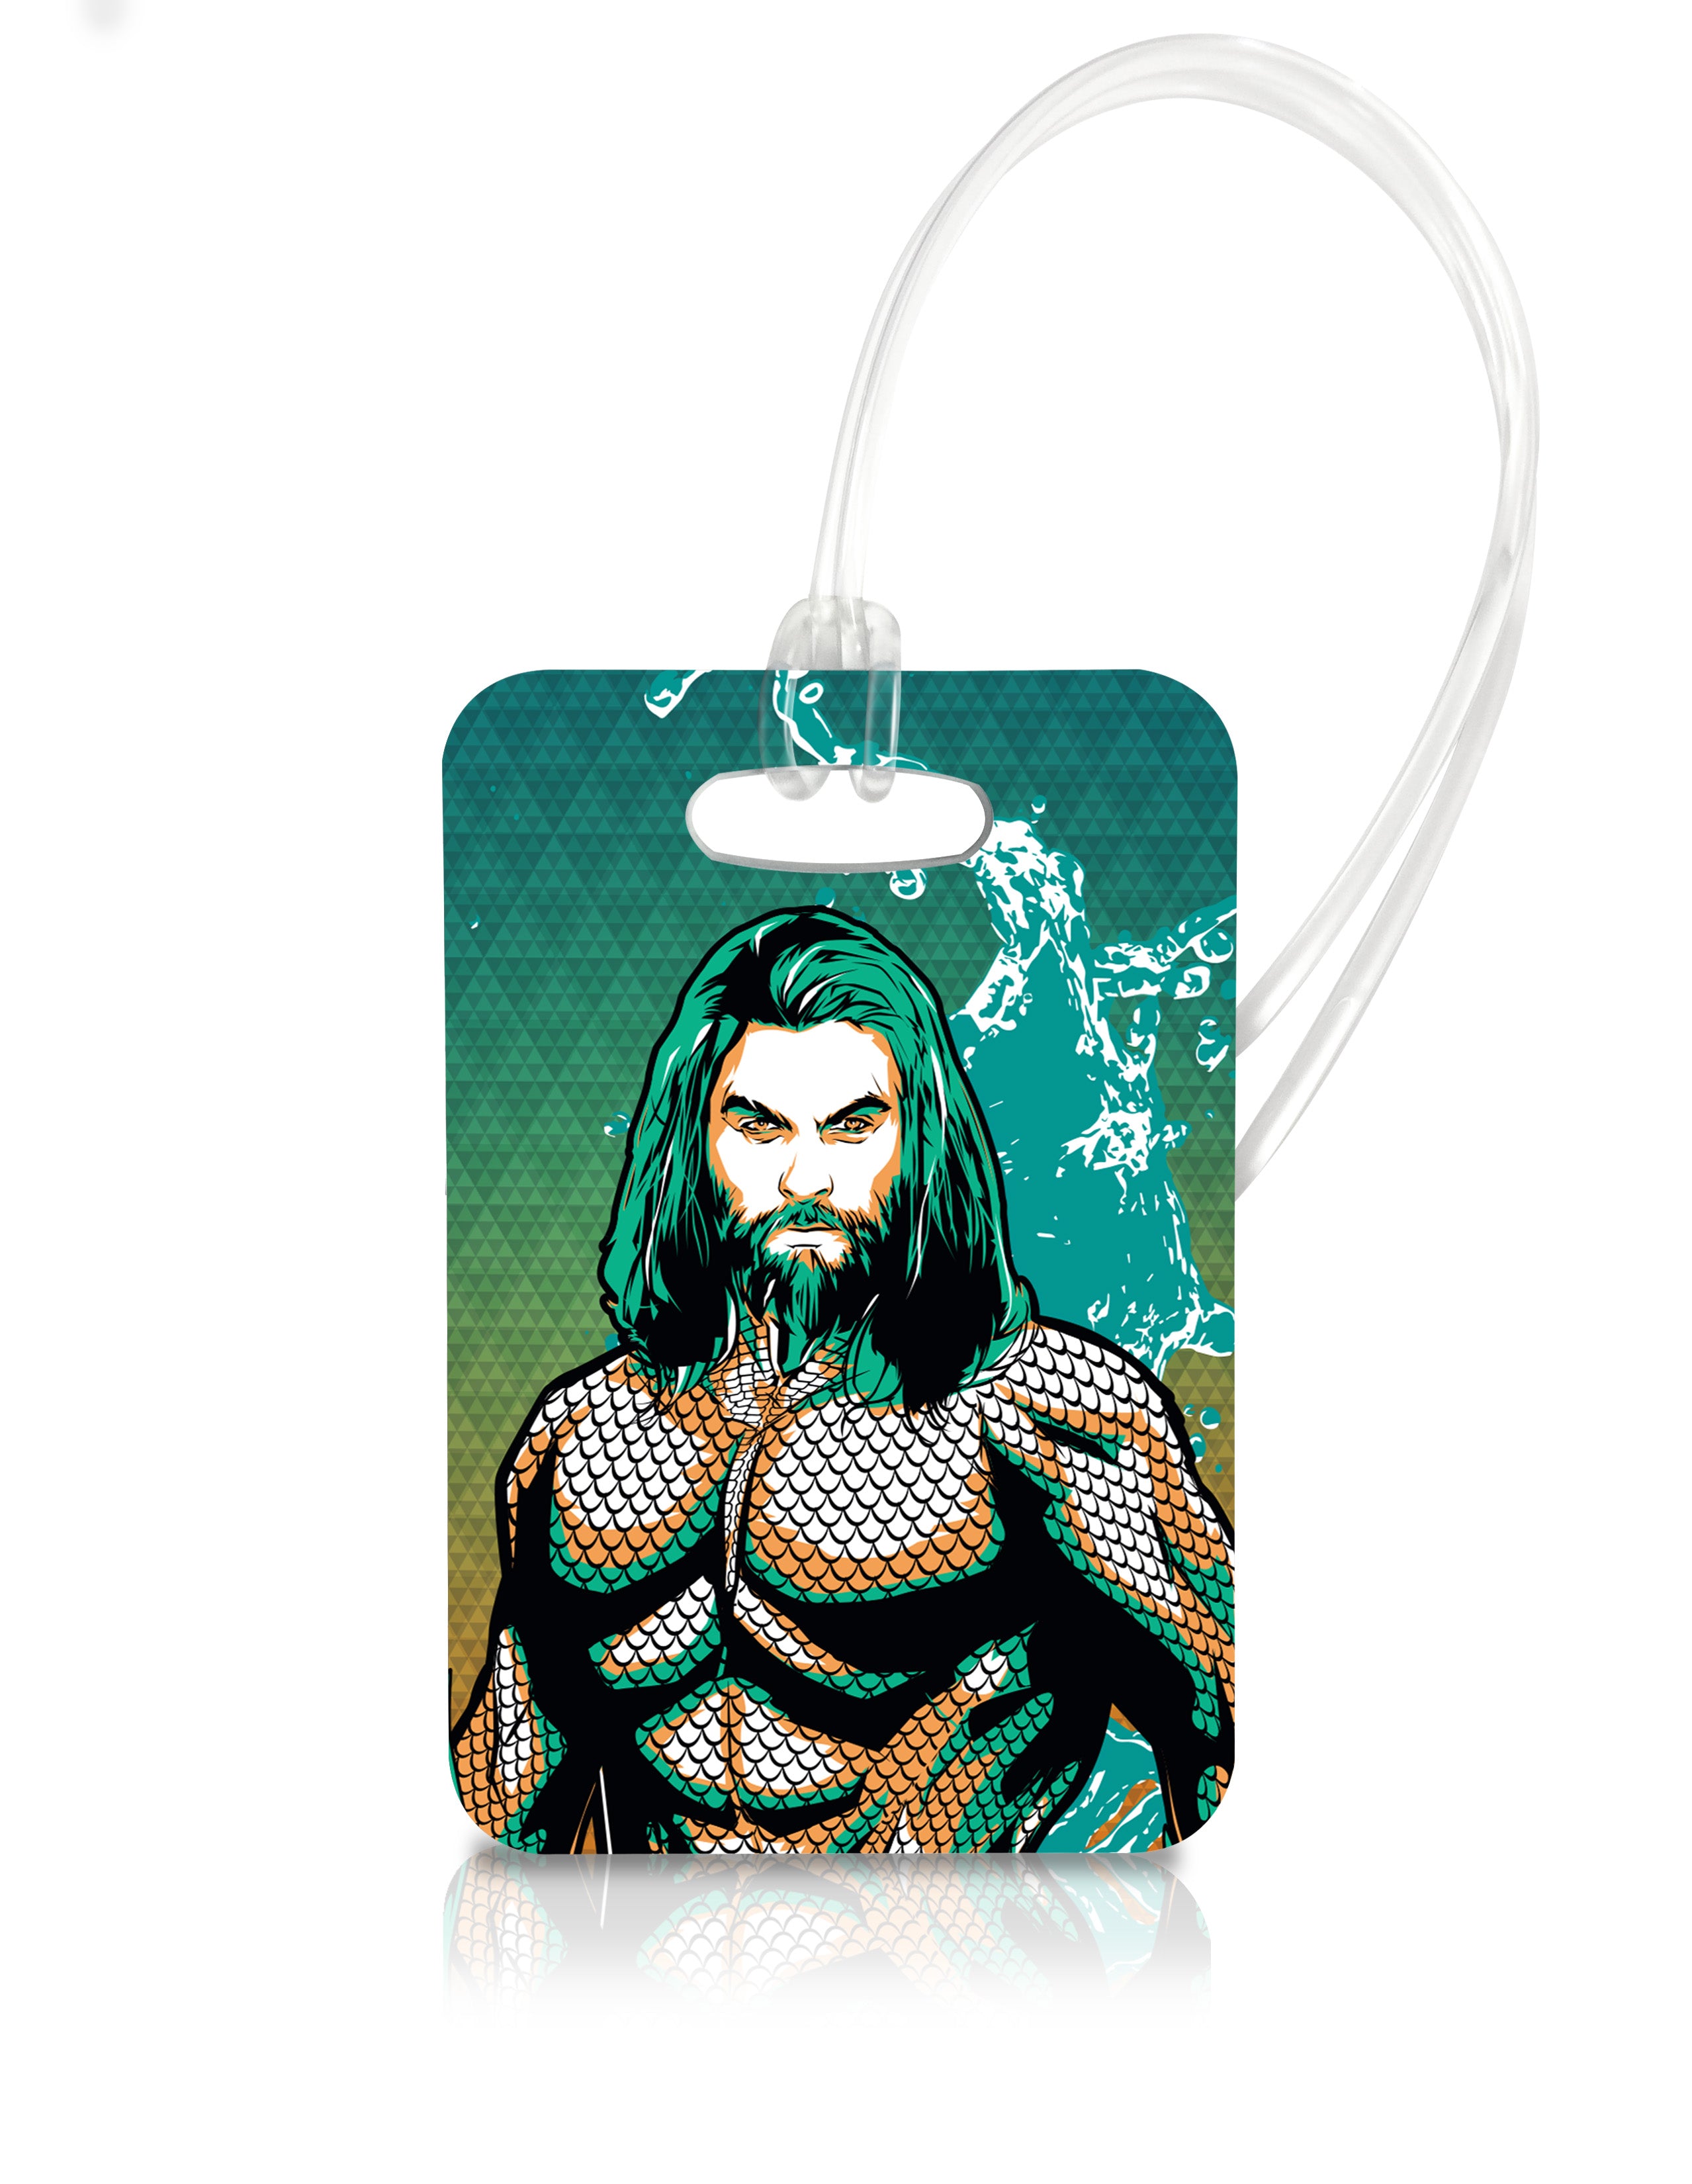 Aquaman (King of Atlantis) Luggage Tag LTREC048